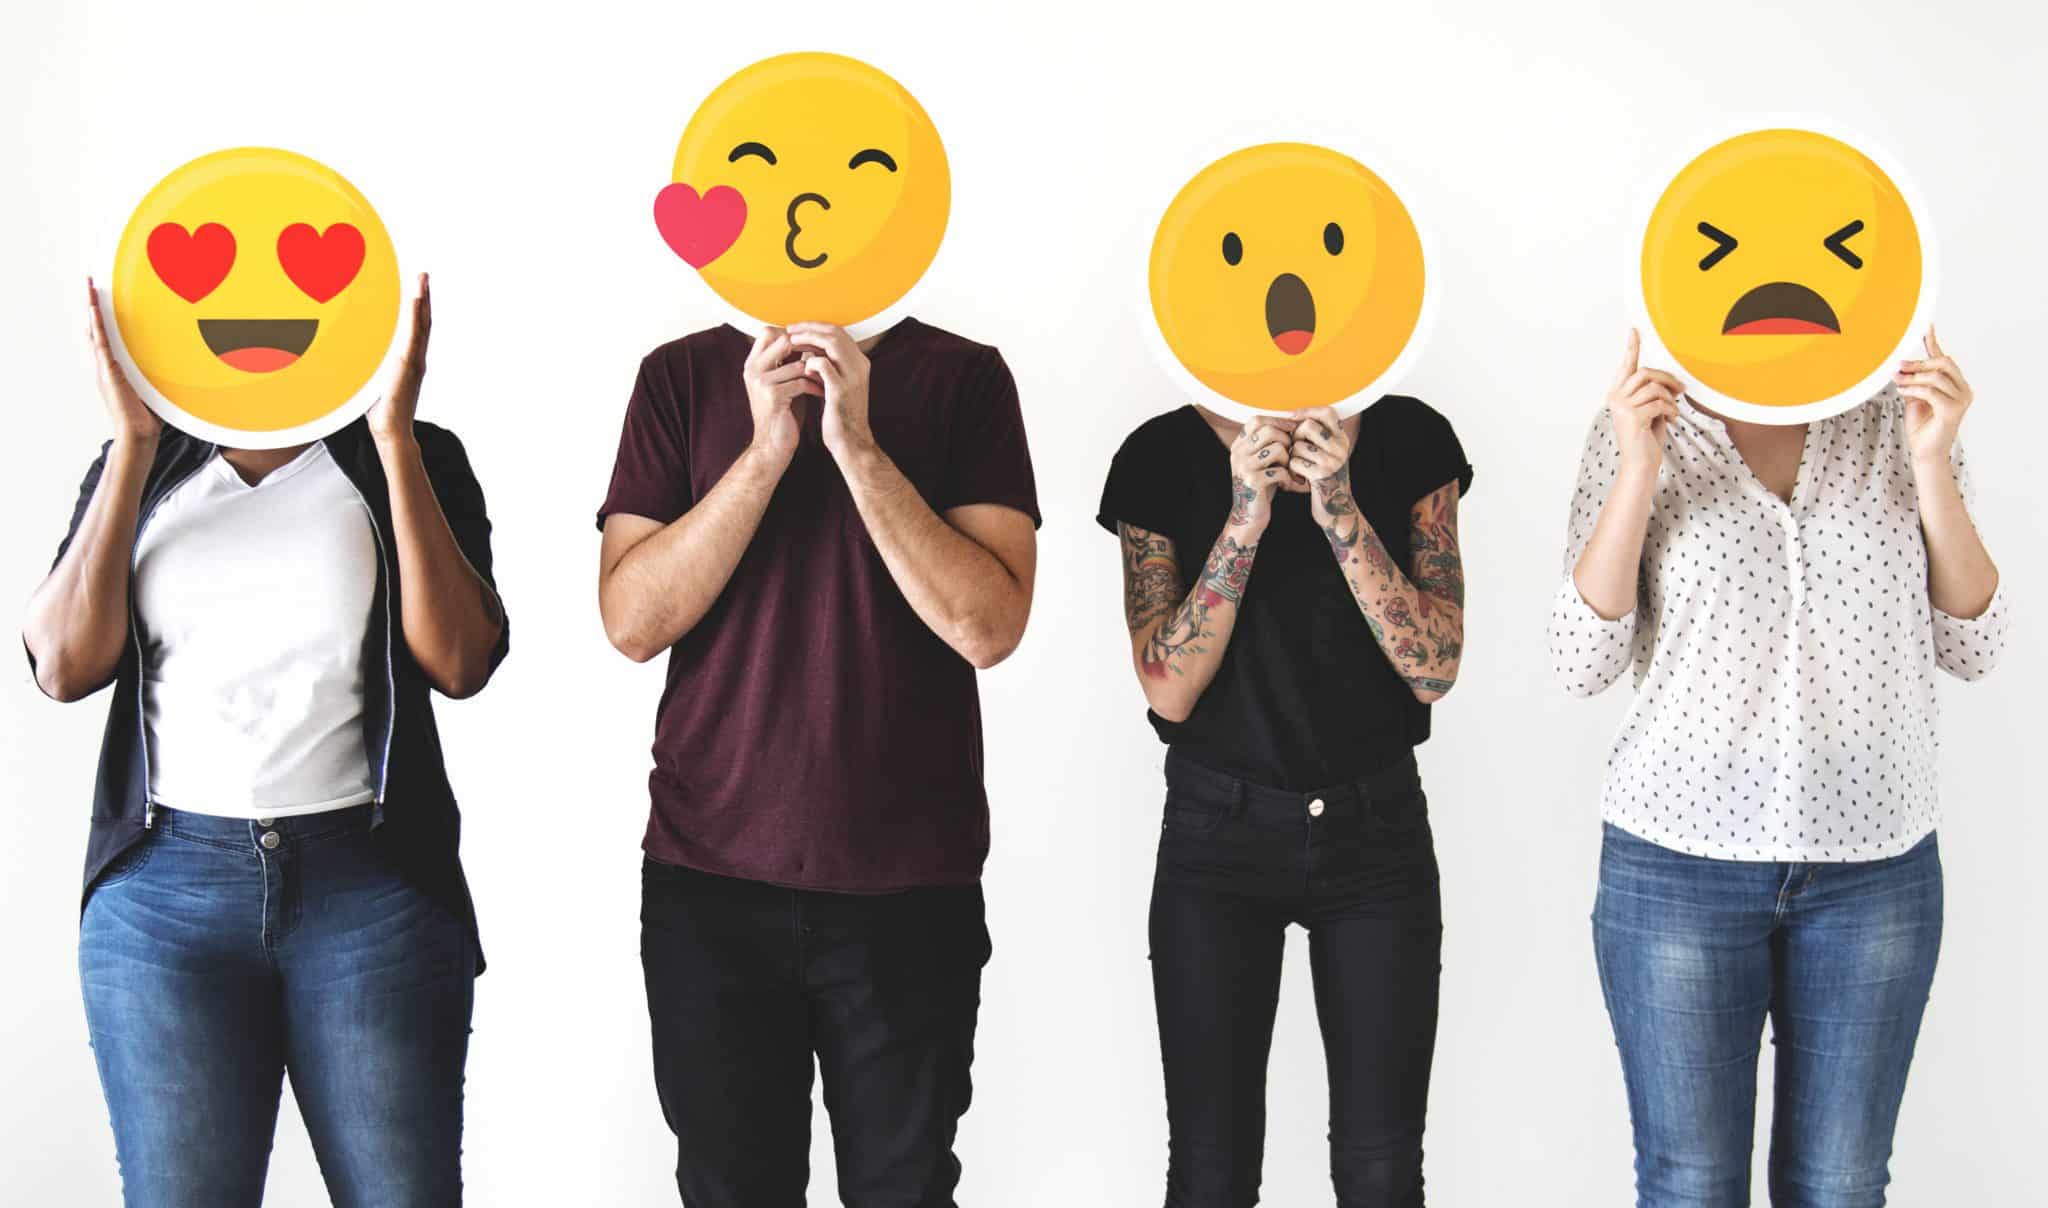 Four people holding emojis